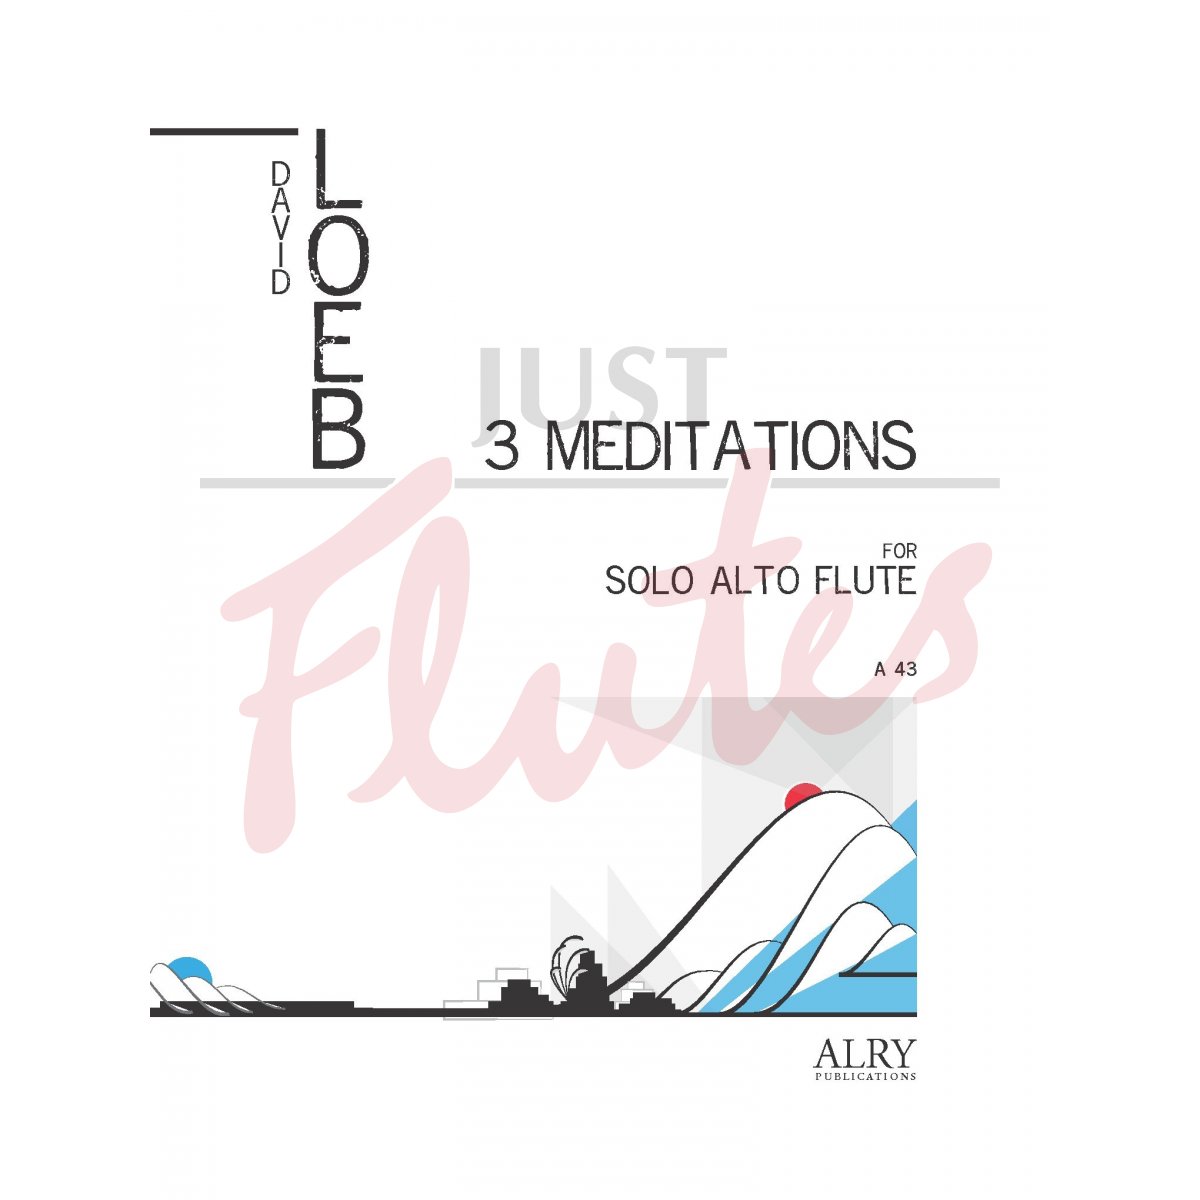 Three Meditations for Alto Flute Solo